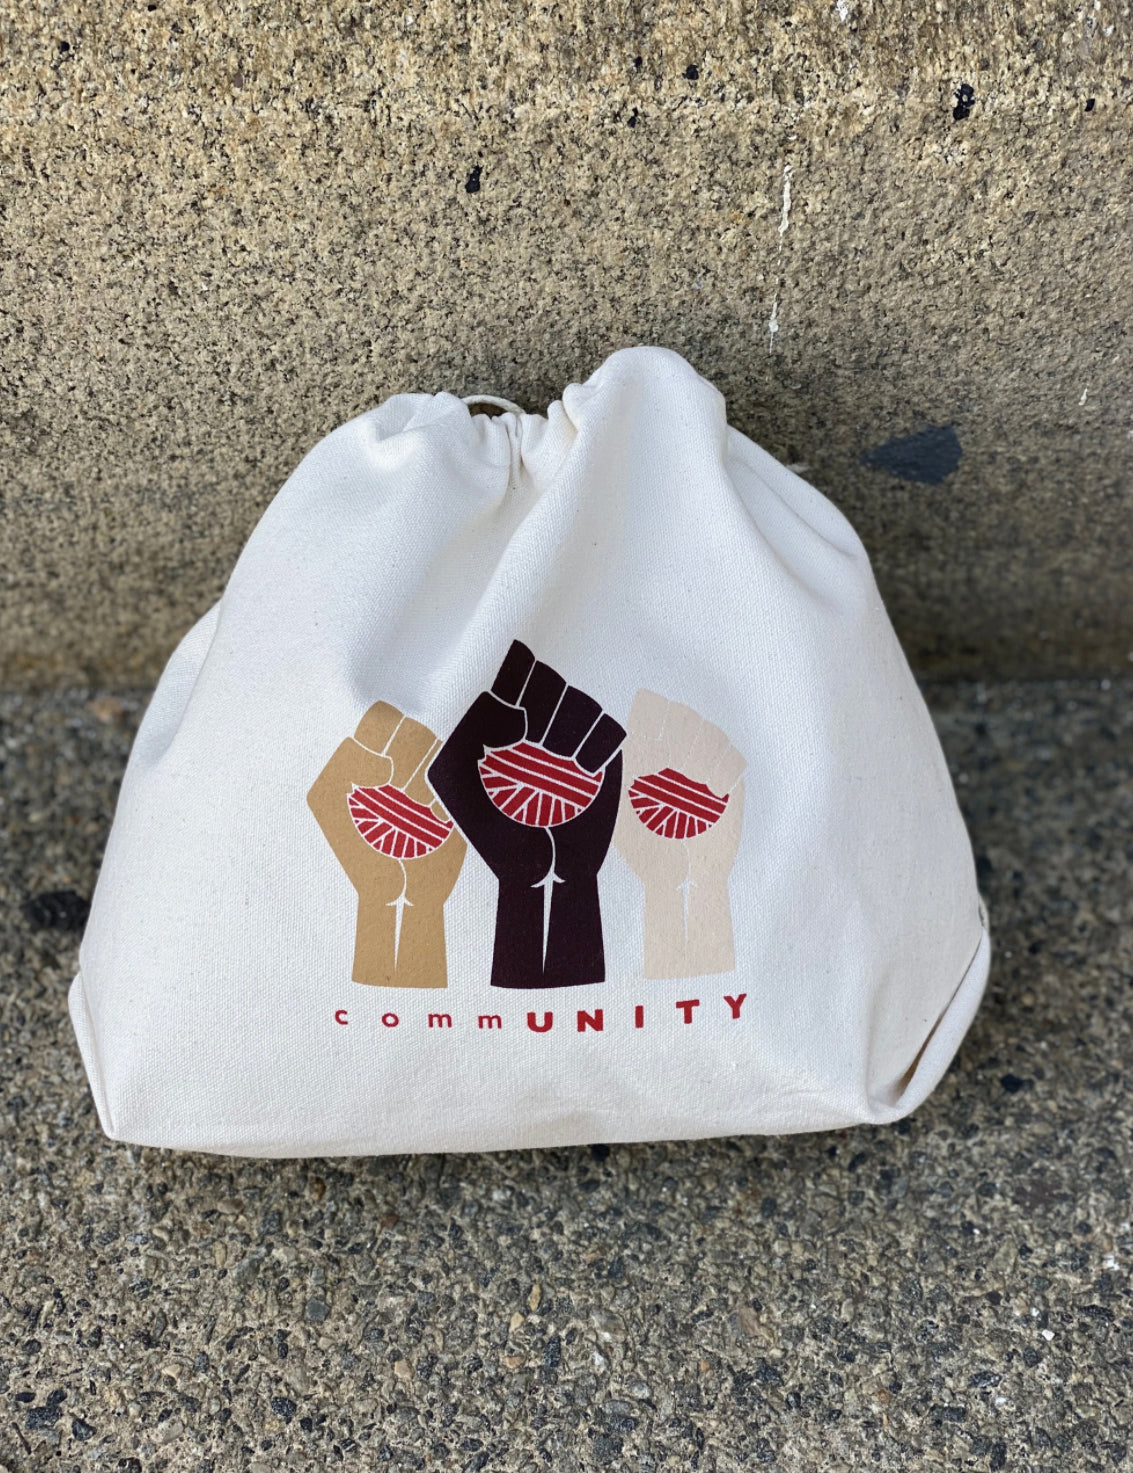 Neighborhood Fiber Co. CommUnity Project Bags